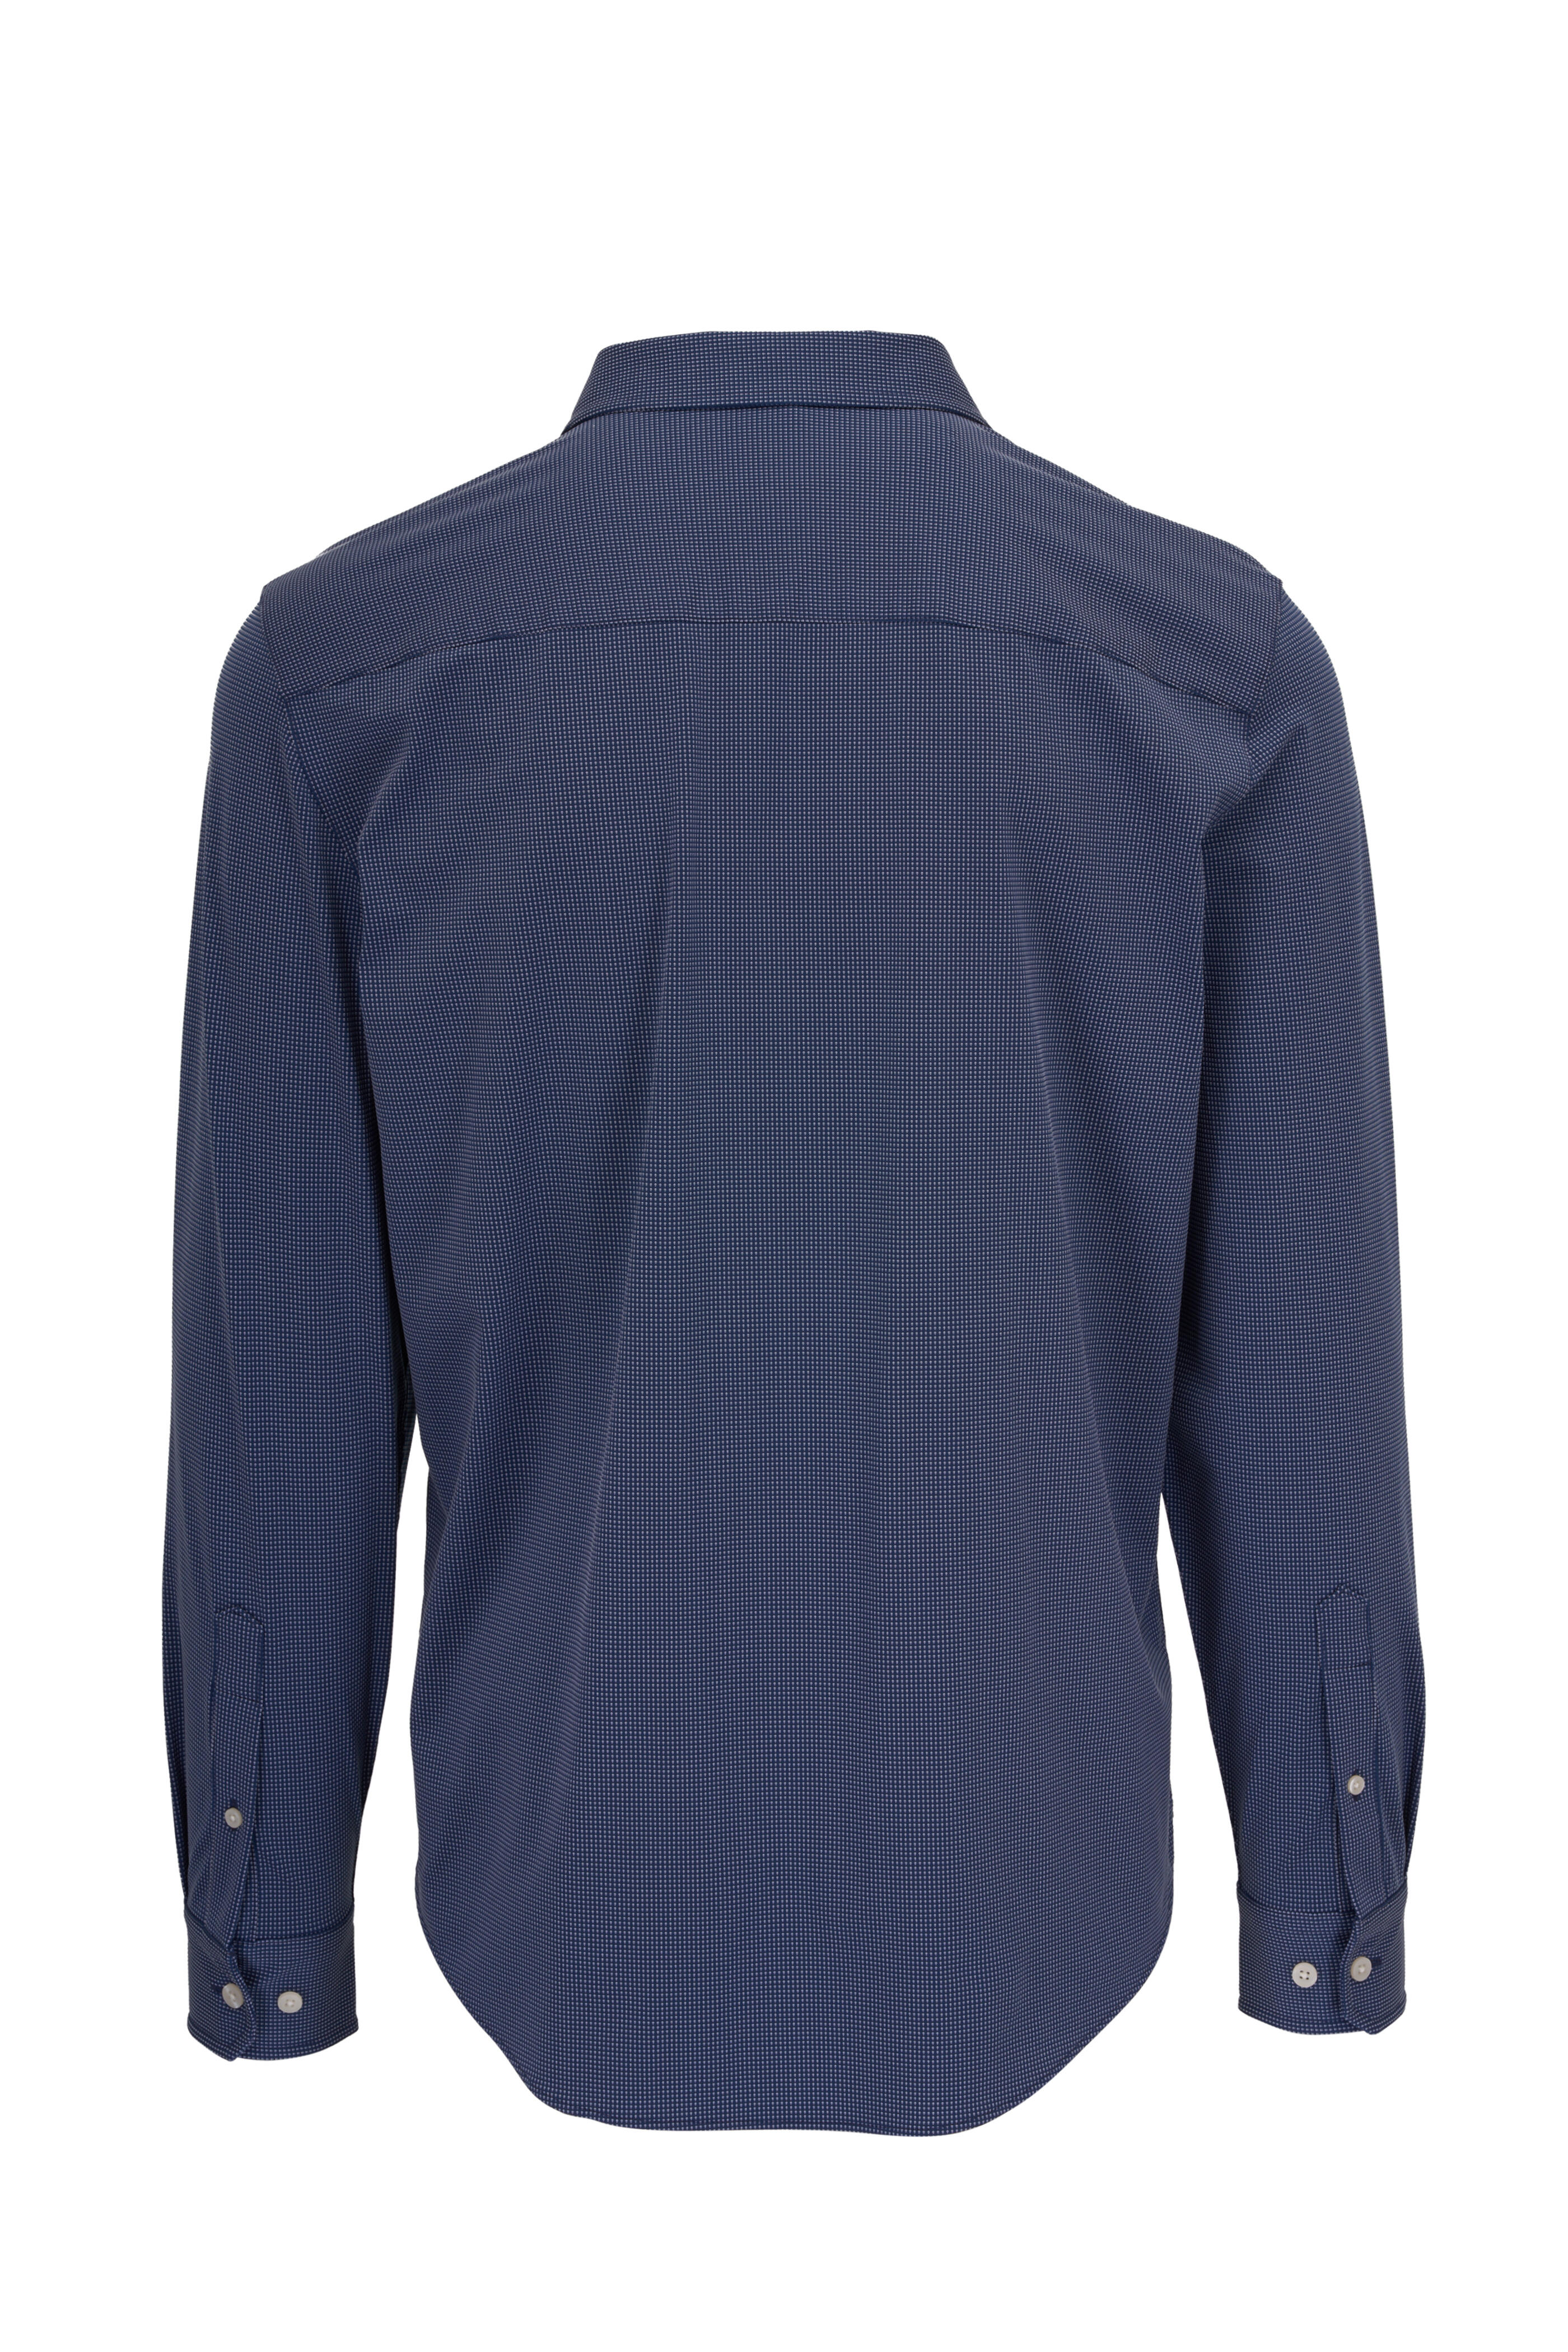 Rhone Apparel - Commuter Blue Geometric Dot Shirt